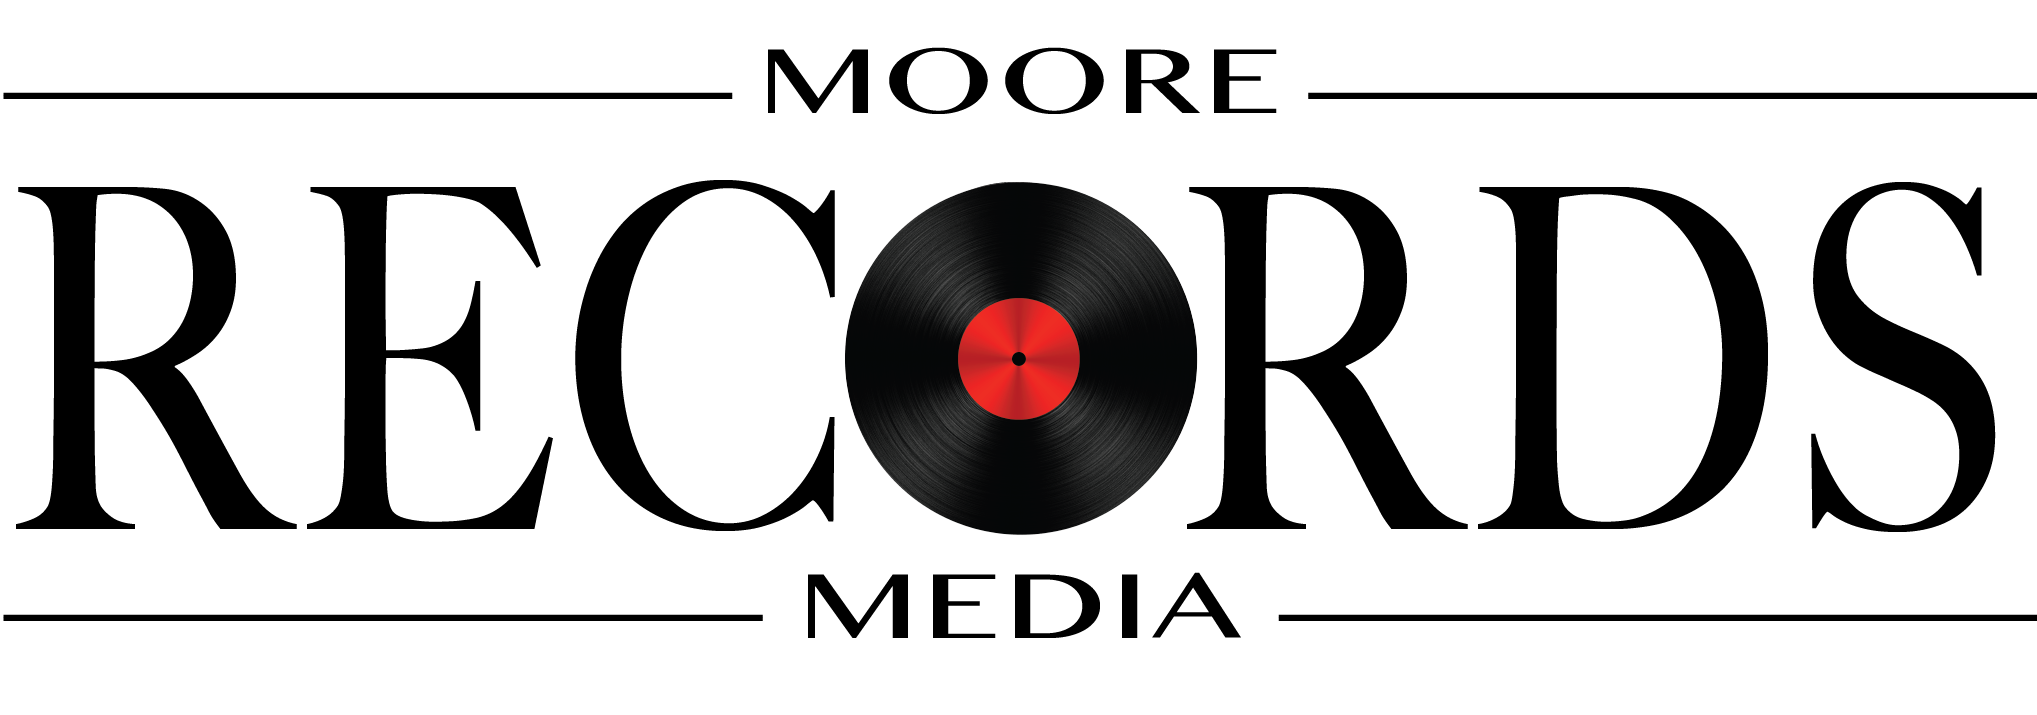 Moore Media Records logo.